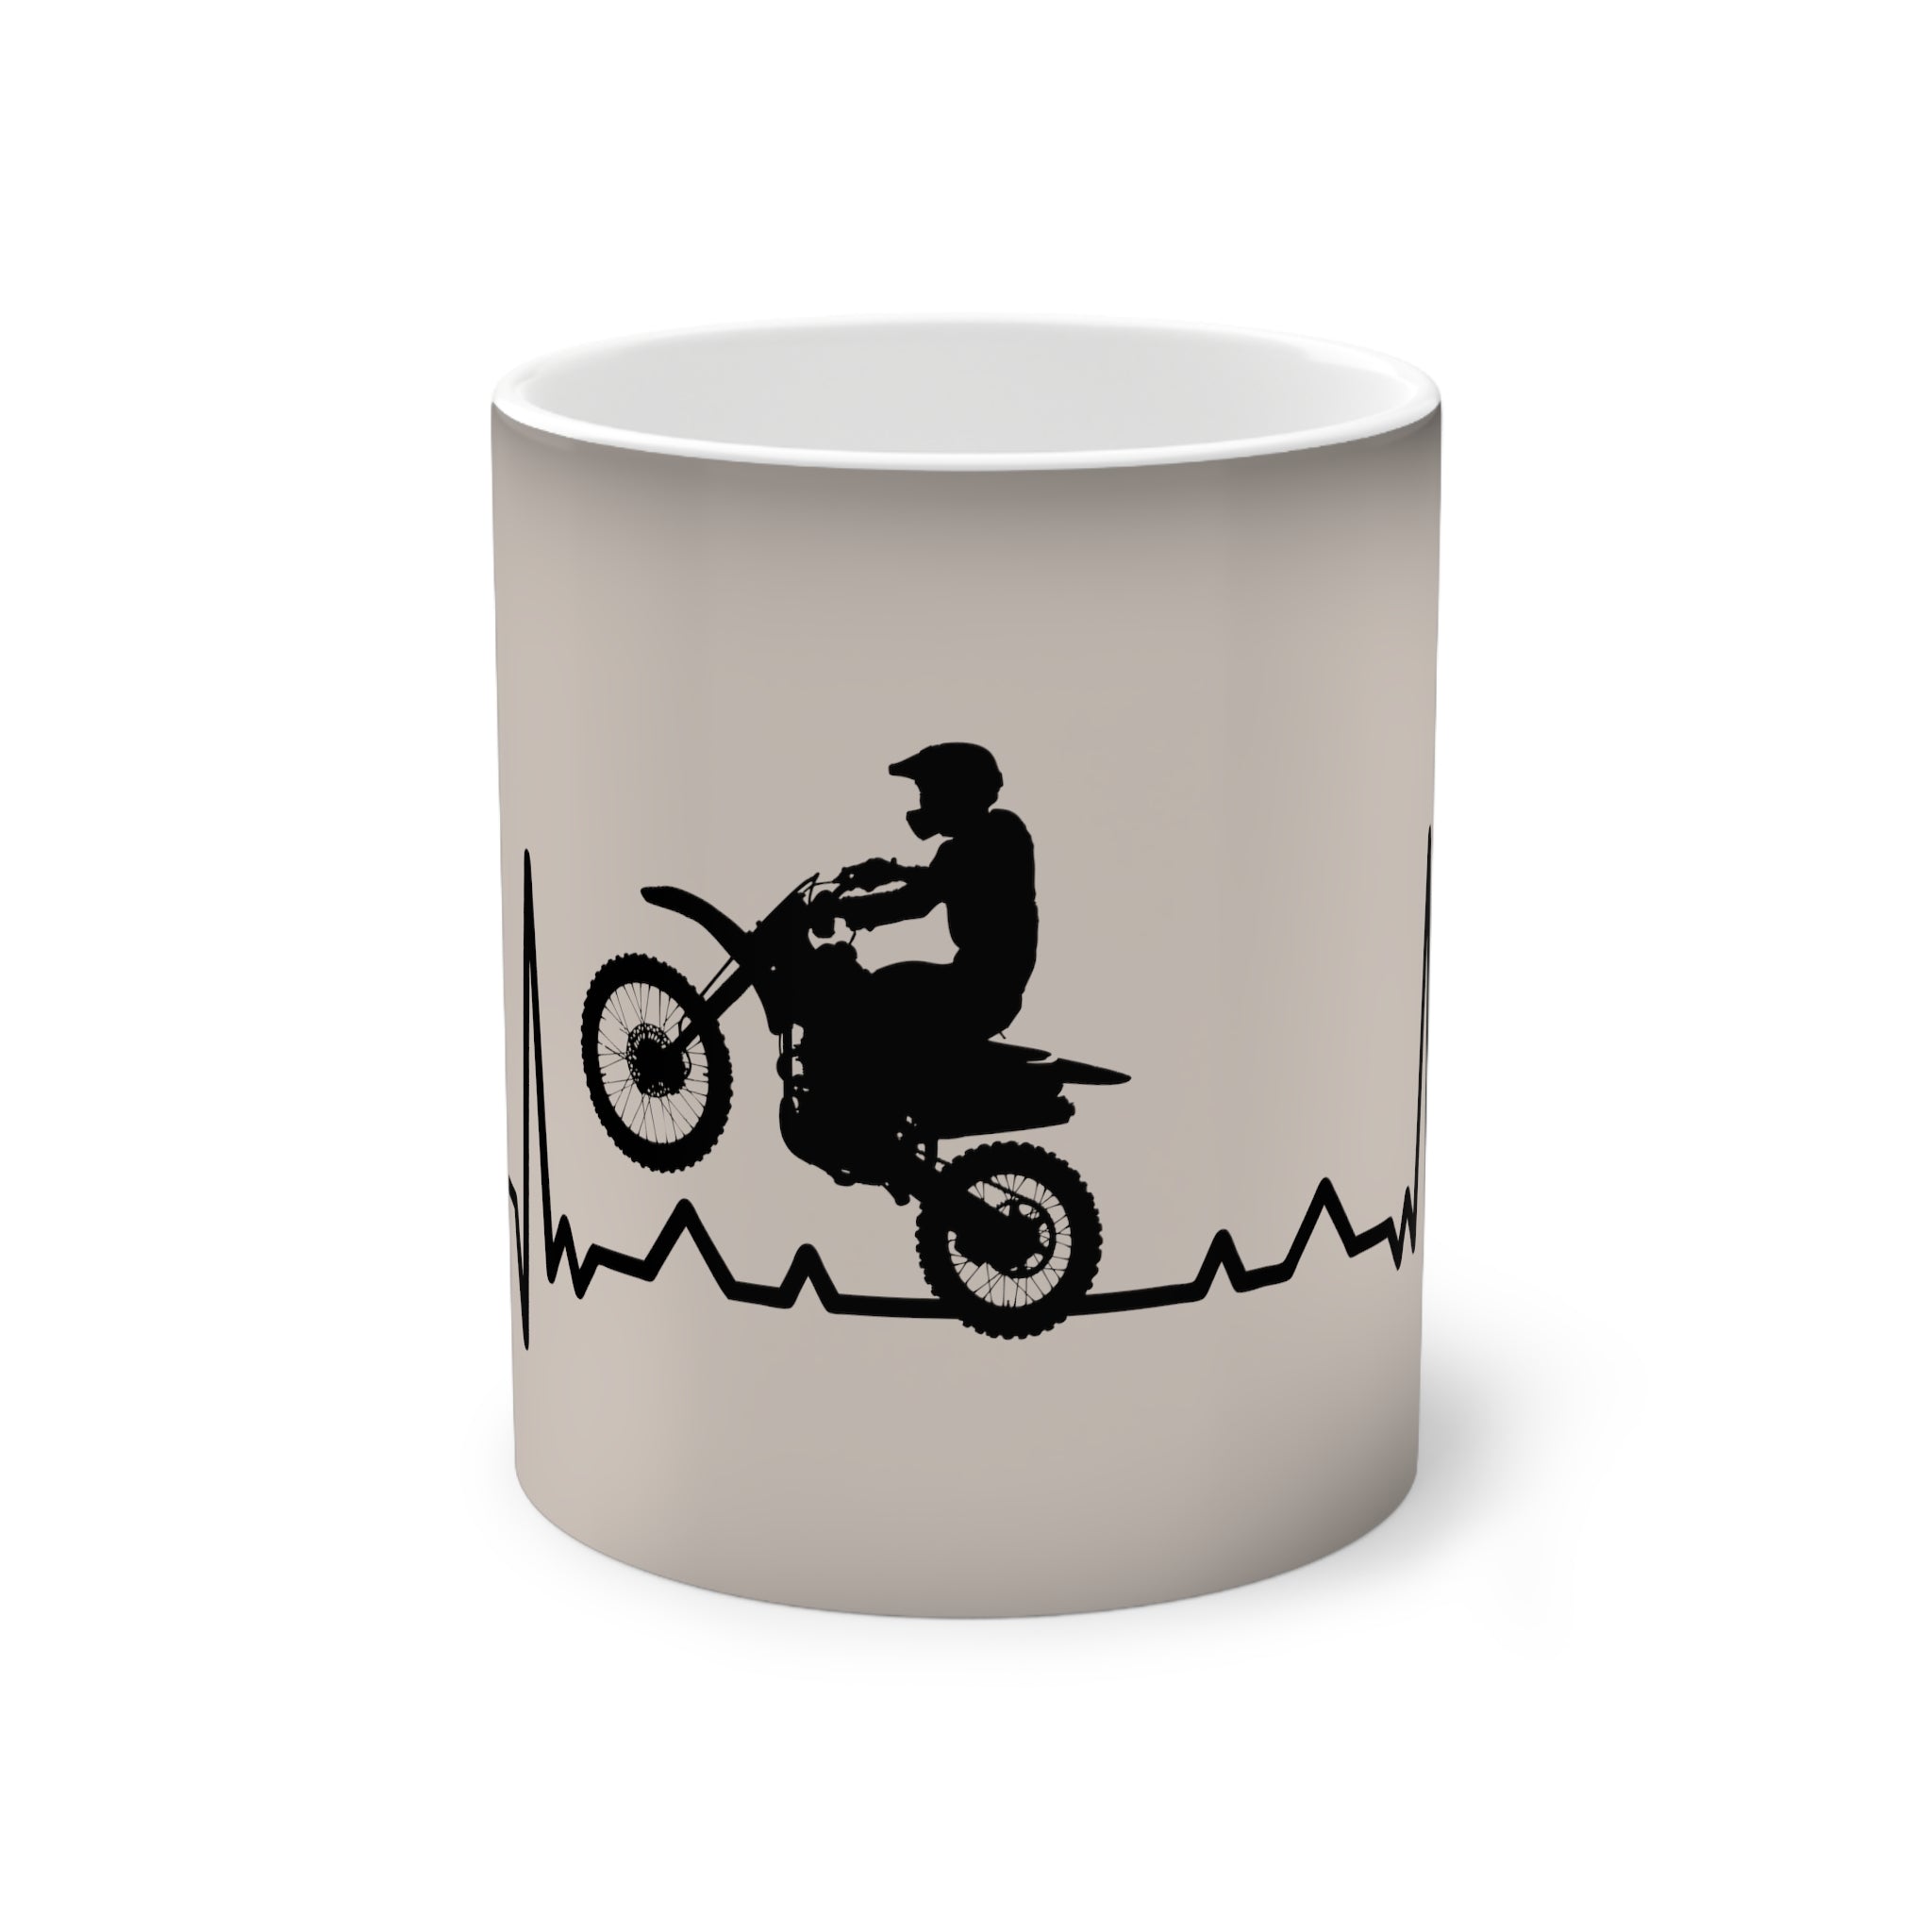 Motorrad-Art, Kaffeetasse mit Farbwechsel, motorrad motiv, lustiger motorradspruch, tasse mit Motorradaufdruck